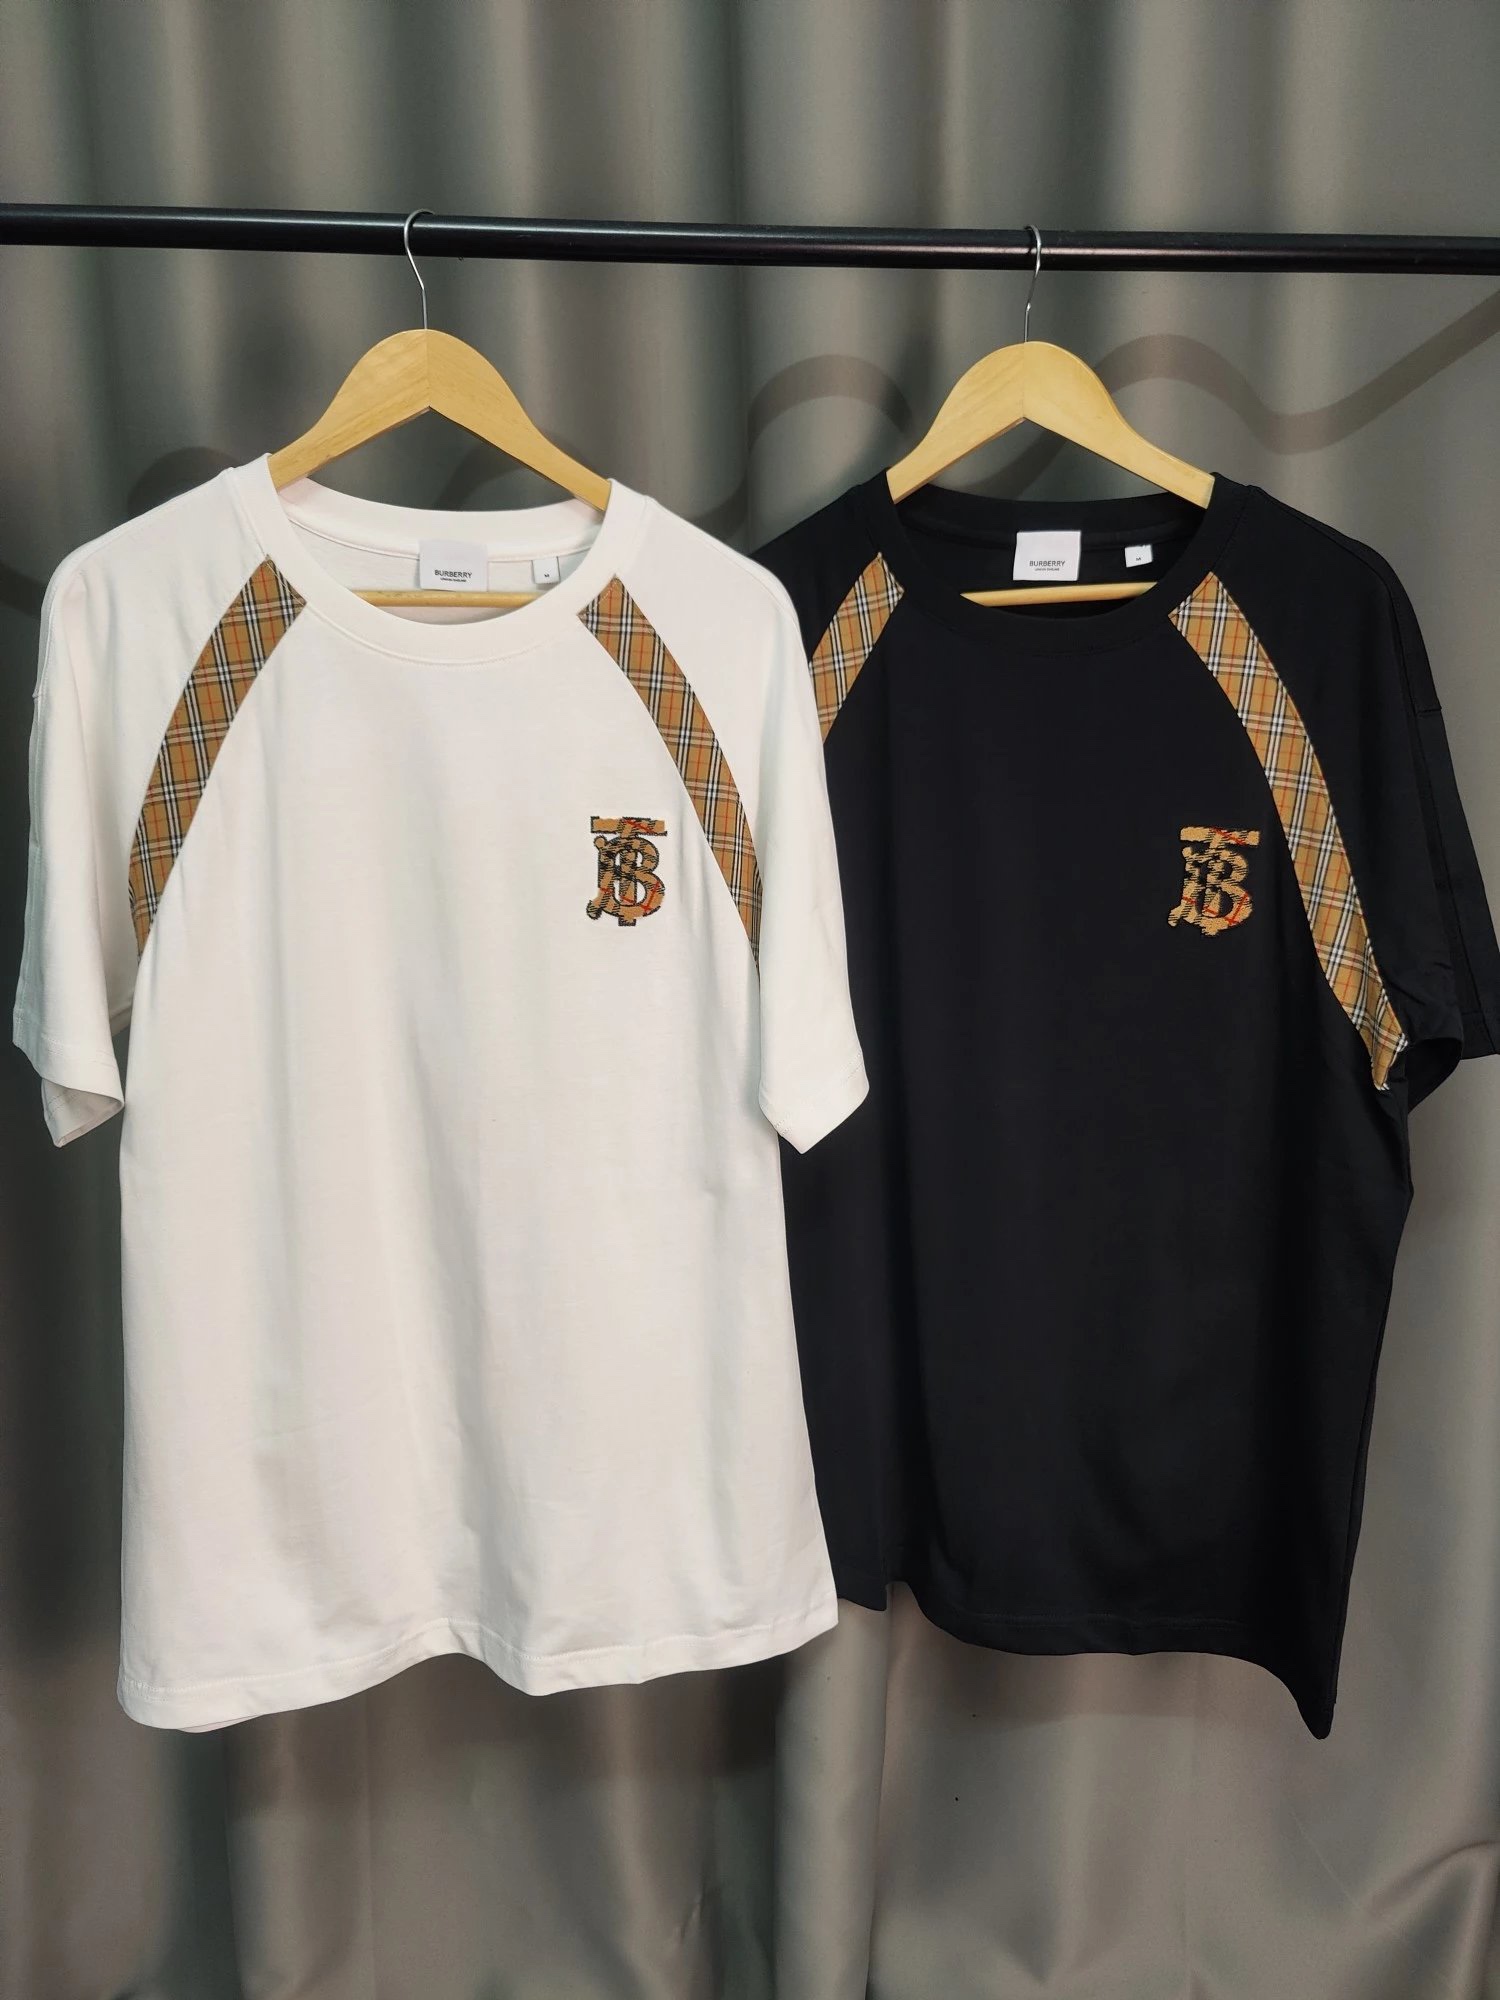 Burberry Clothing T-Shirt Black White Embroidery Unisex Cotton Short Sleeve